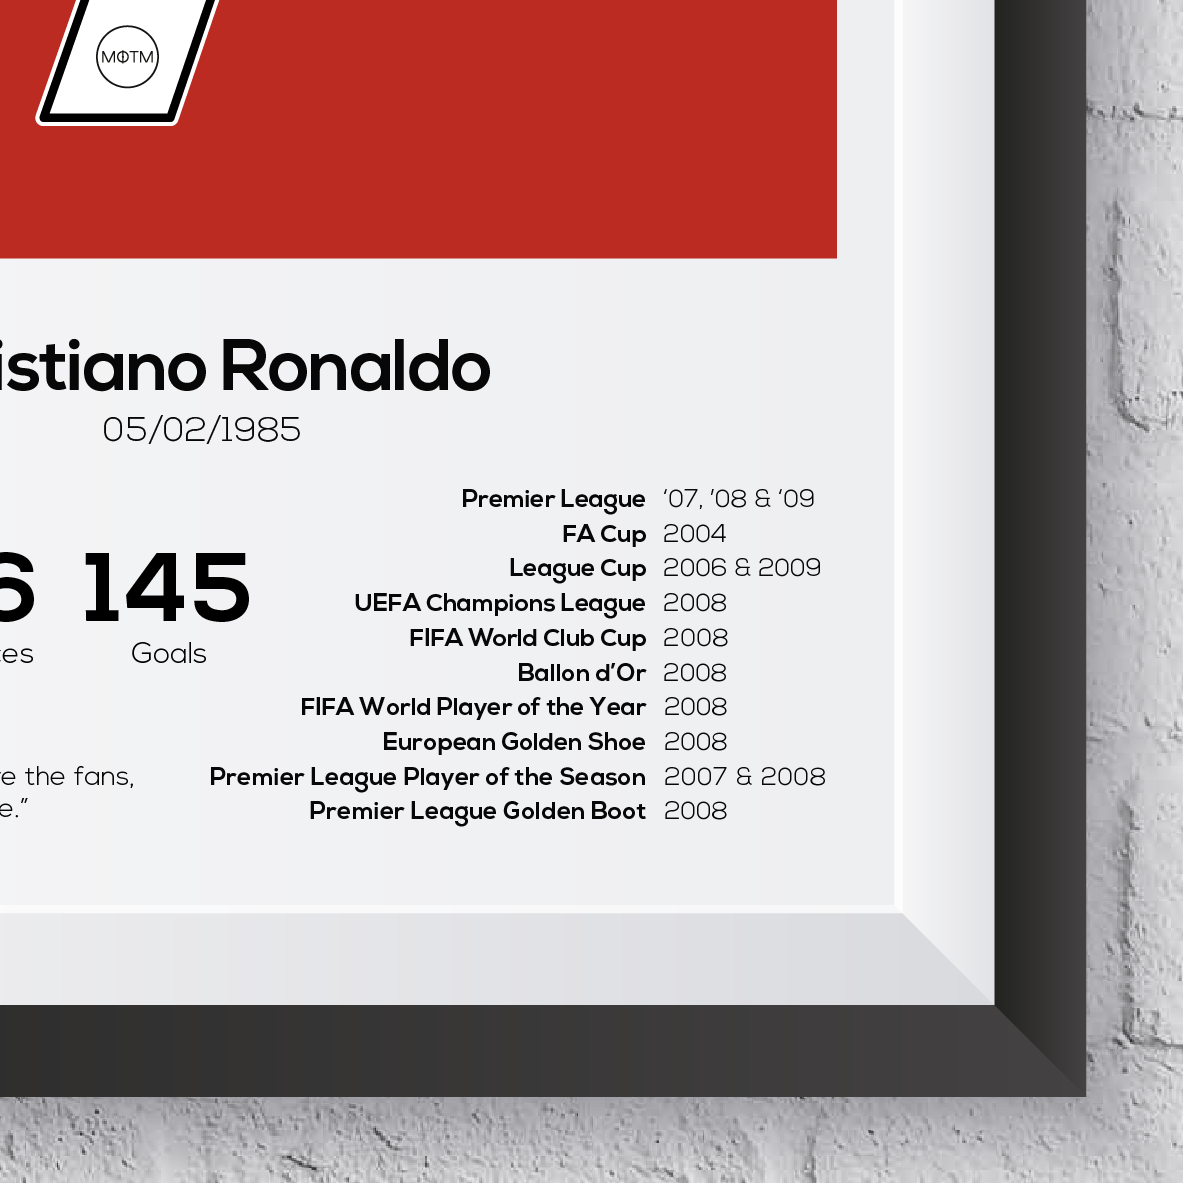 Cristiano Ronaldo Real Madrid Legend Statistikdruck